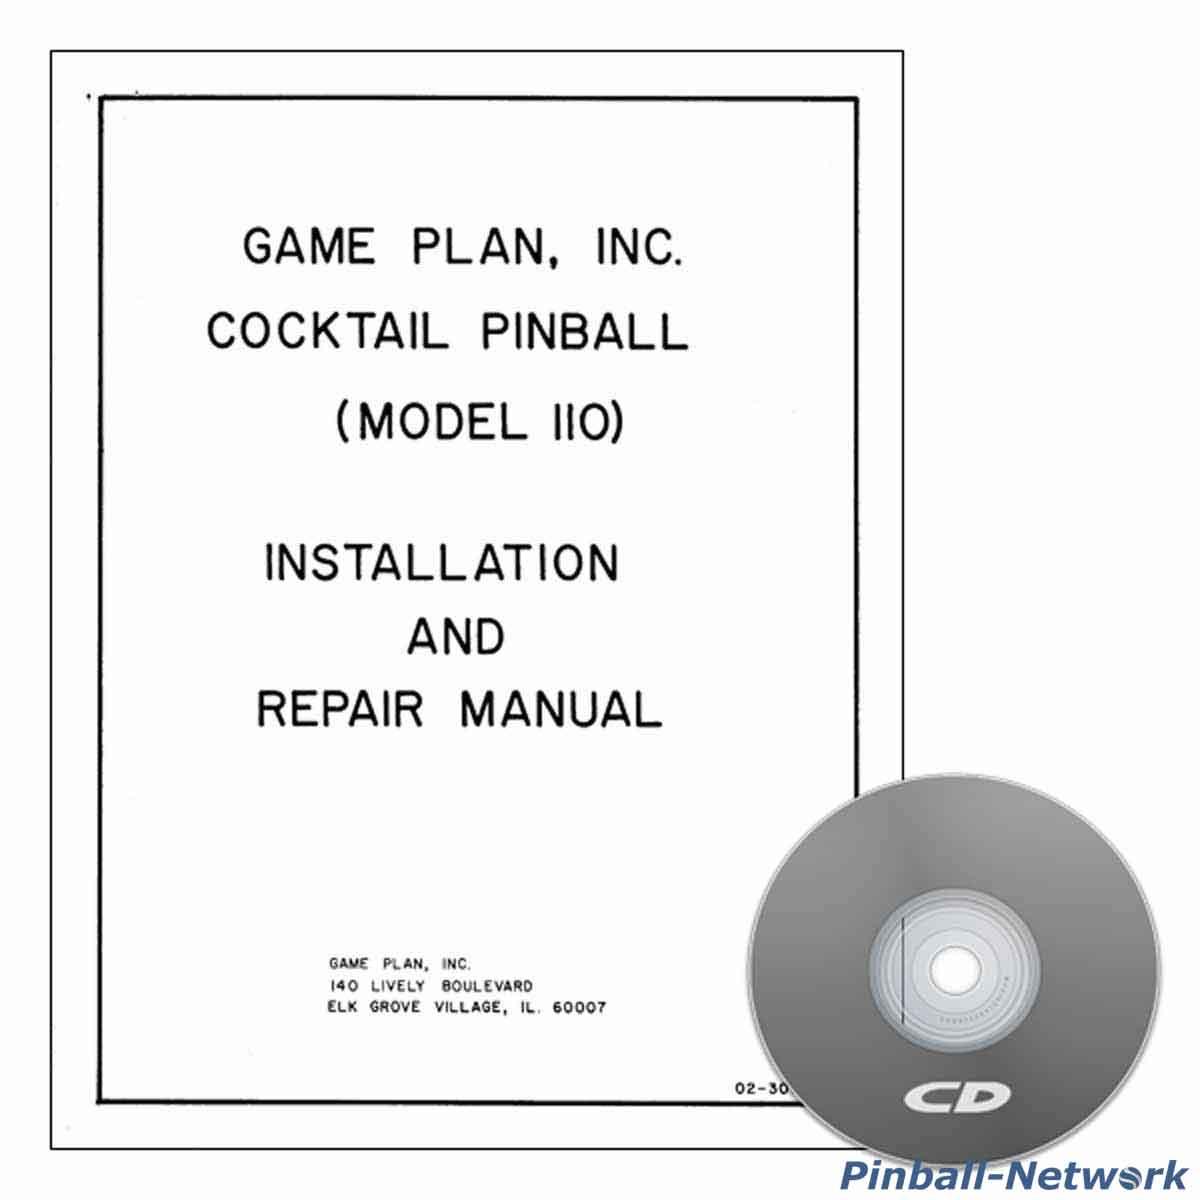 Cocktail Pinball Installation and Repair Manual